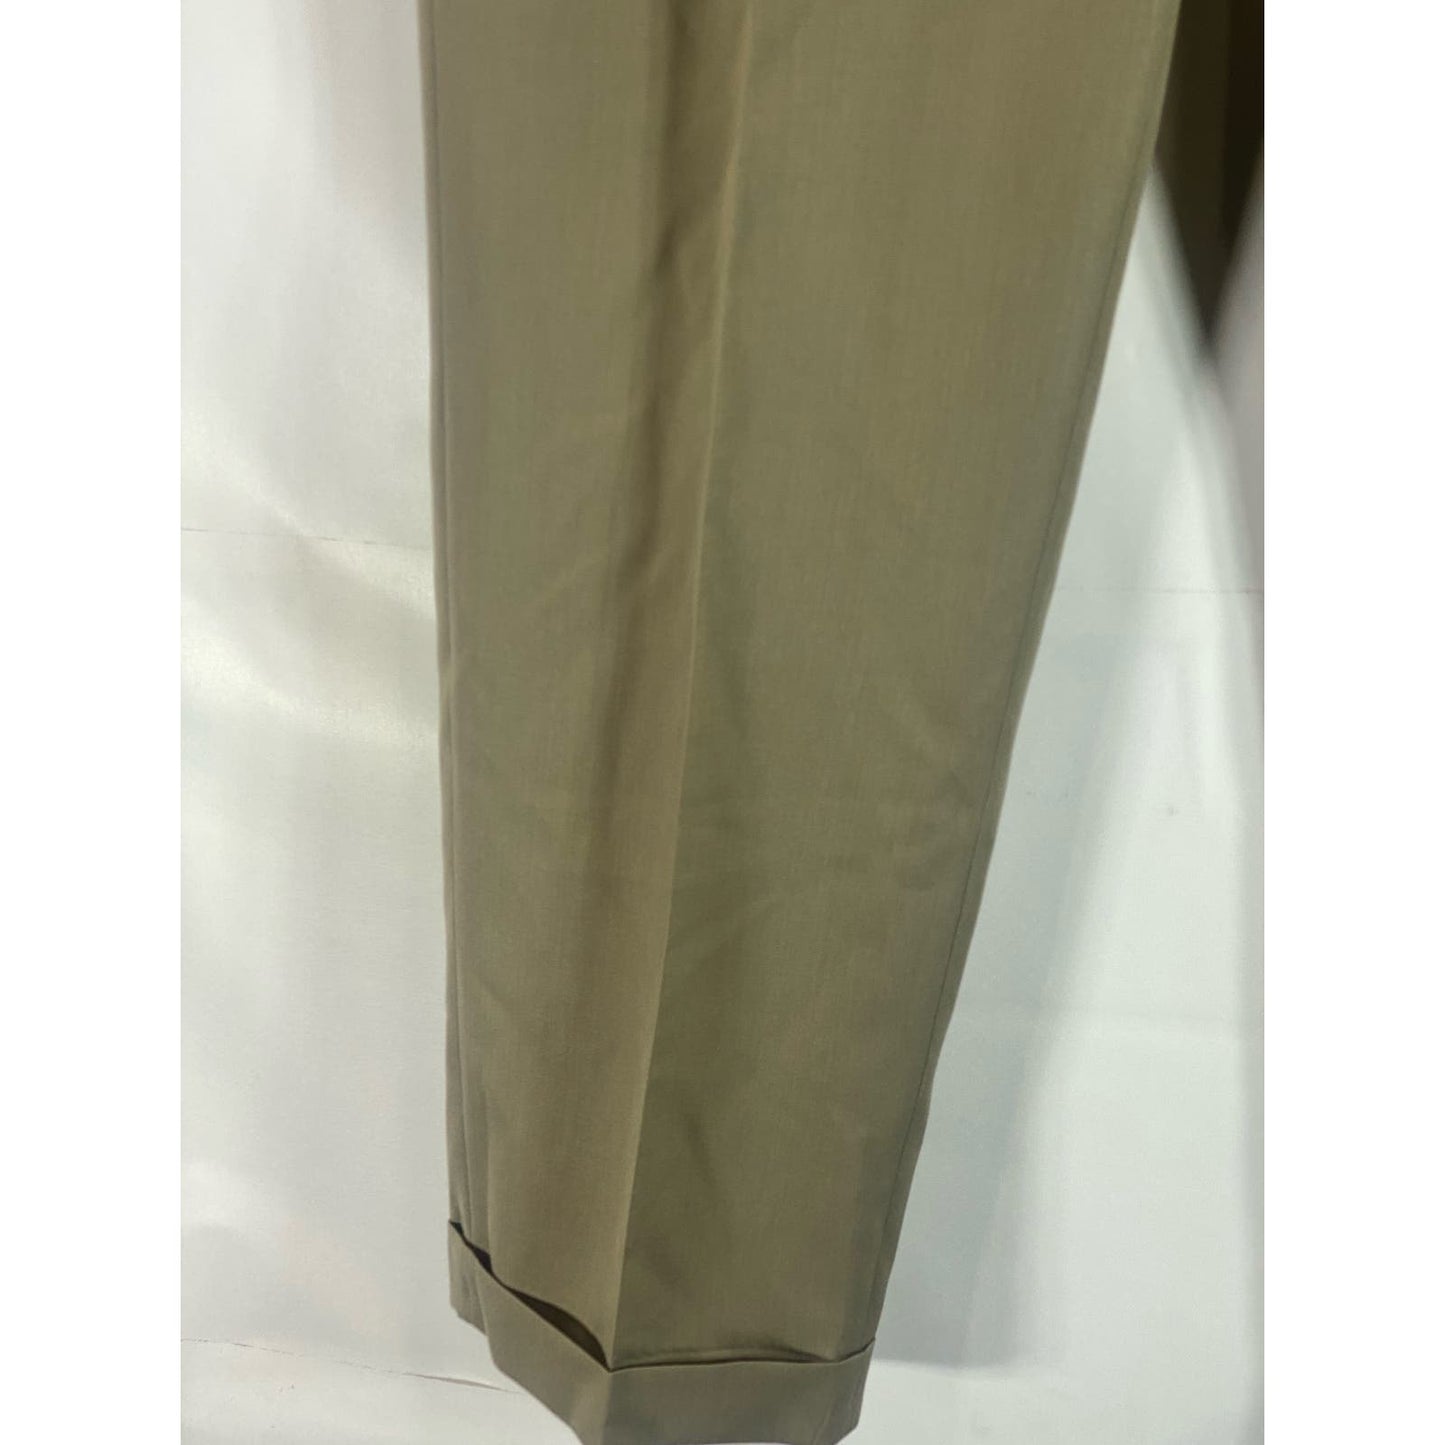 TOMMY HILFIGER Men's Tan Vintage Pleated Front Cuffed Dress Pants SZ 40X31